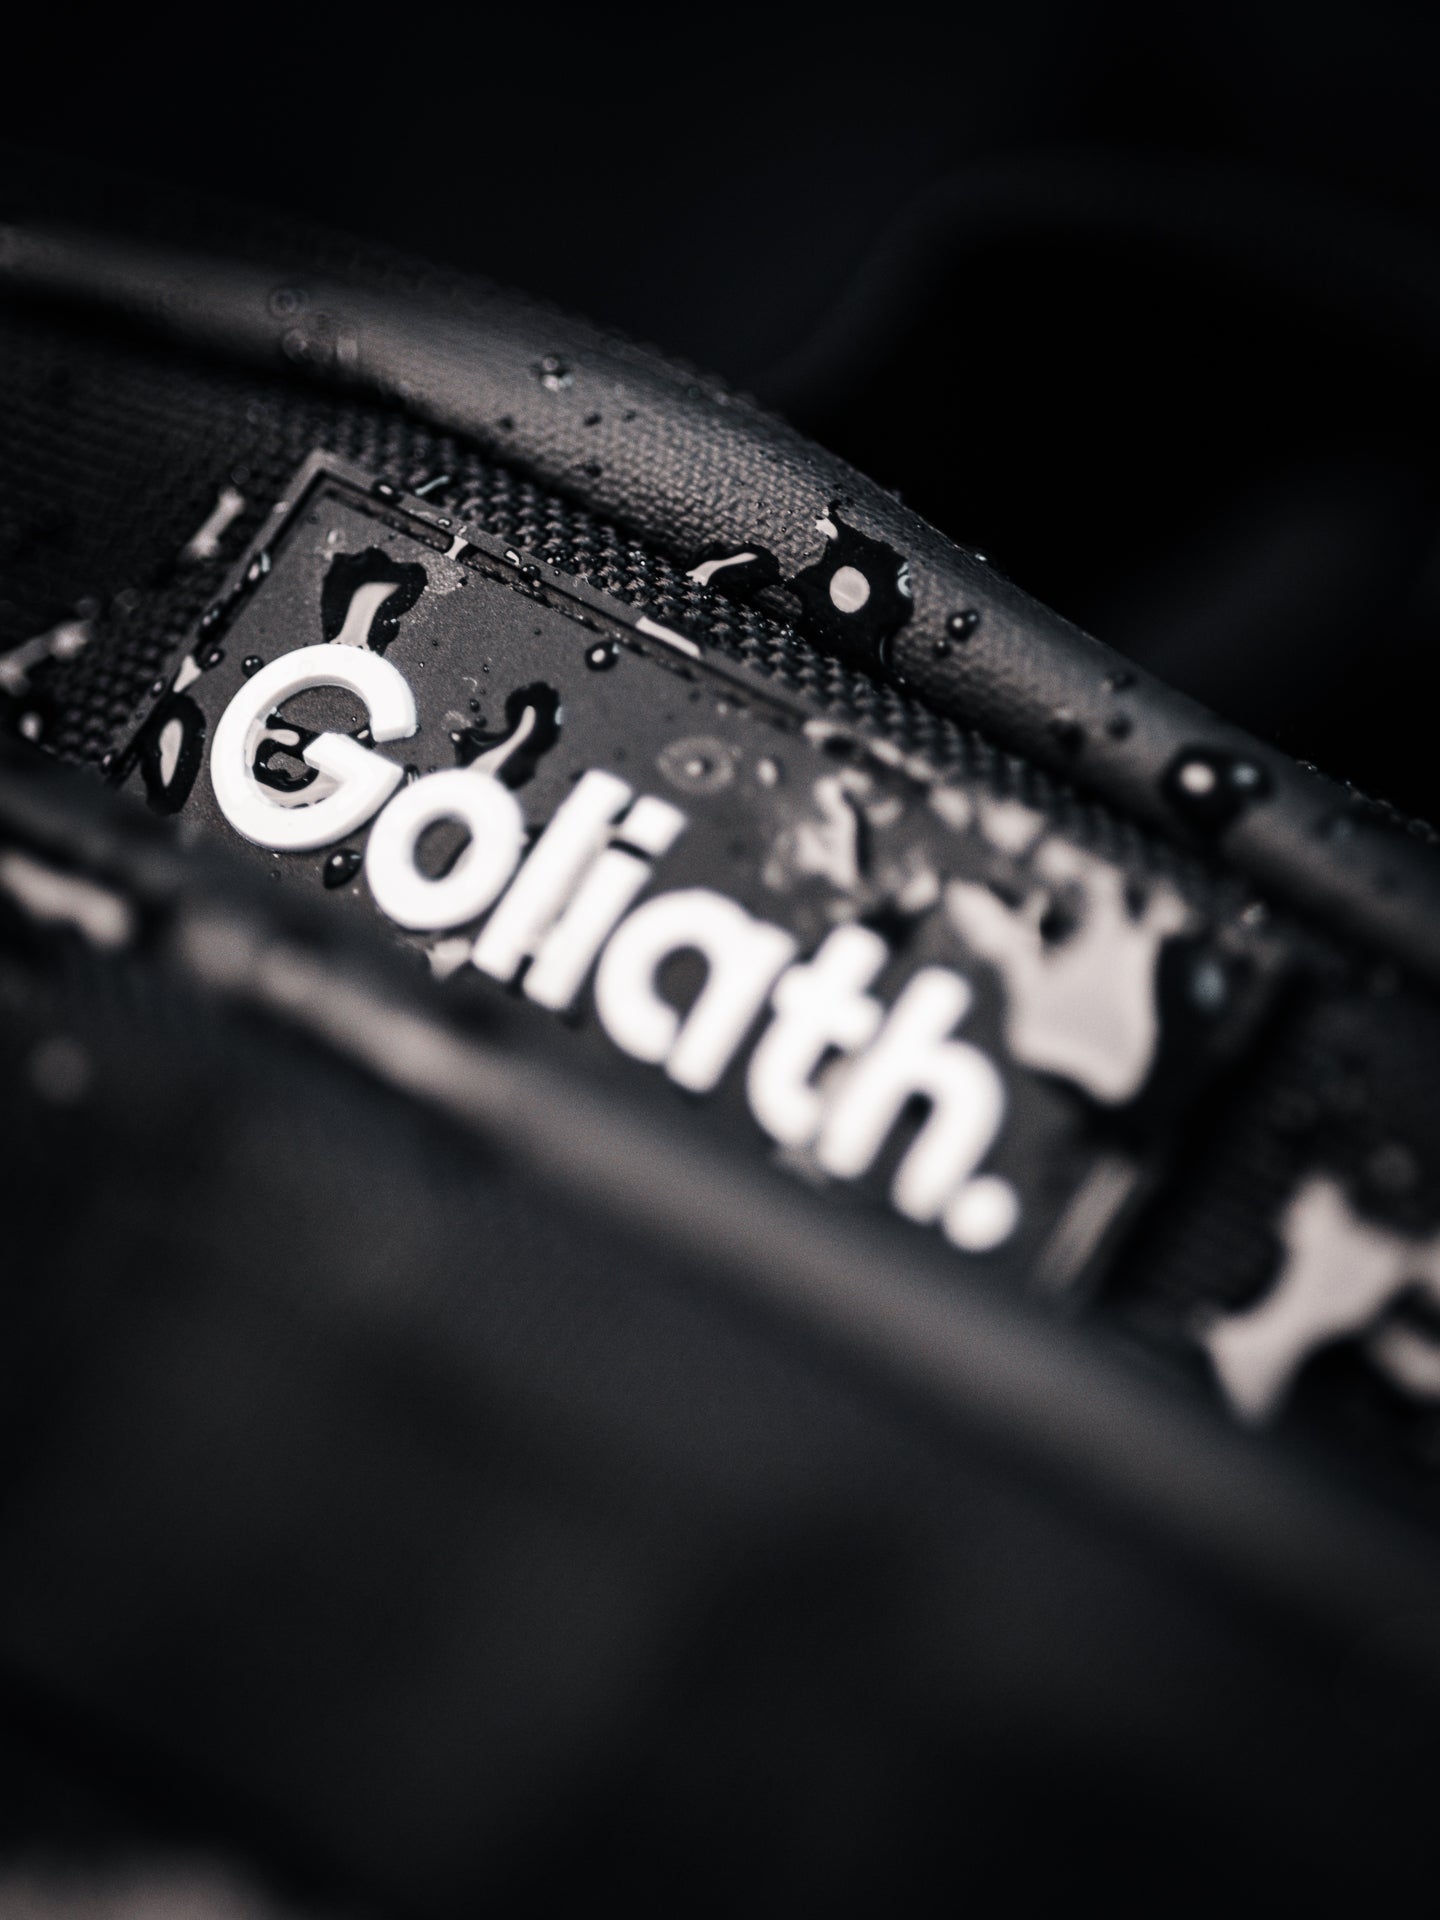 Goliath Defender Backpack - Outdoors